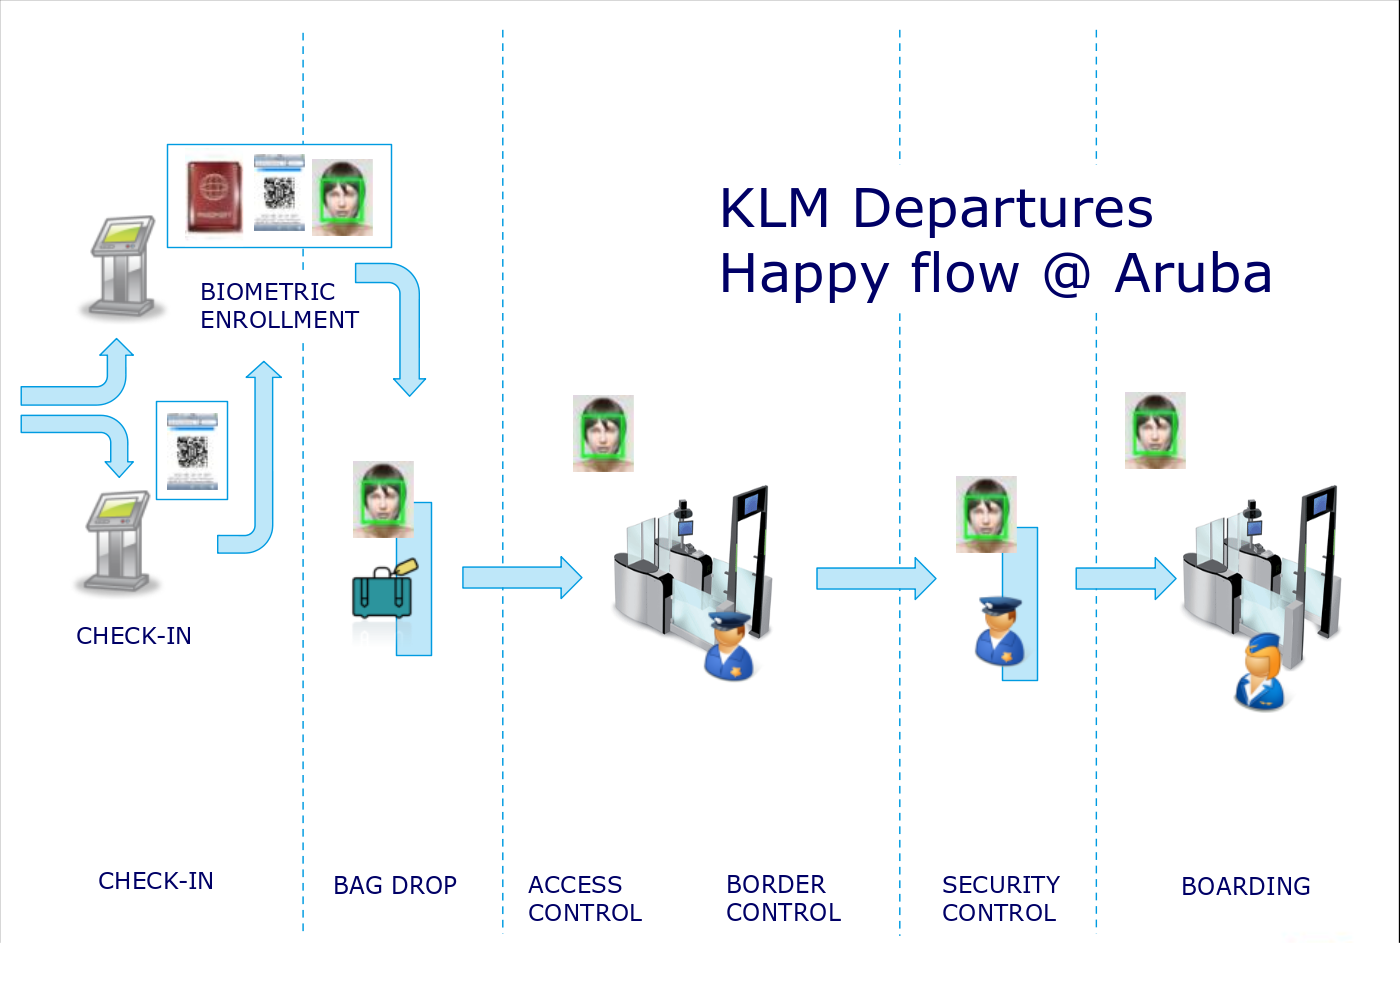 KLM's vision of "Happy Flow". Click image for larger version.